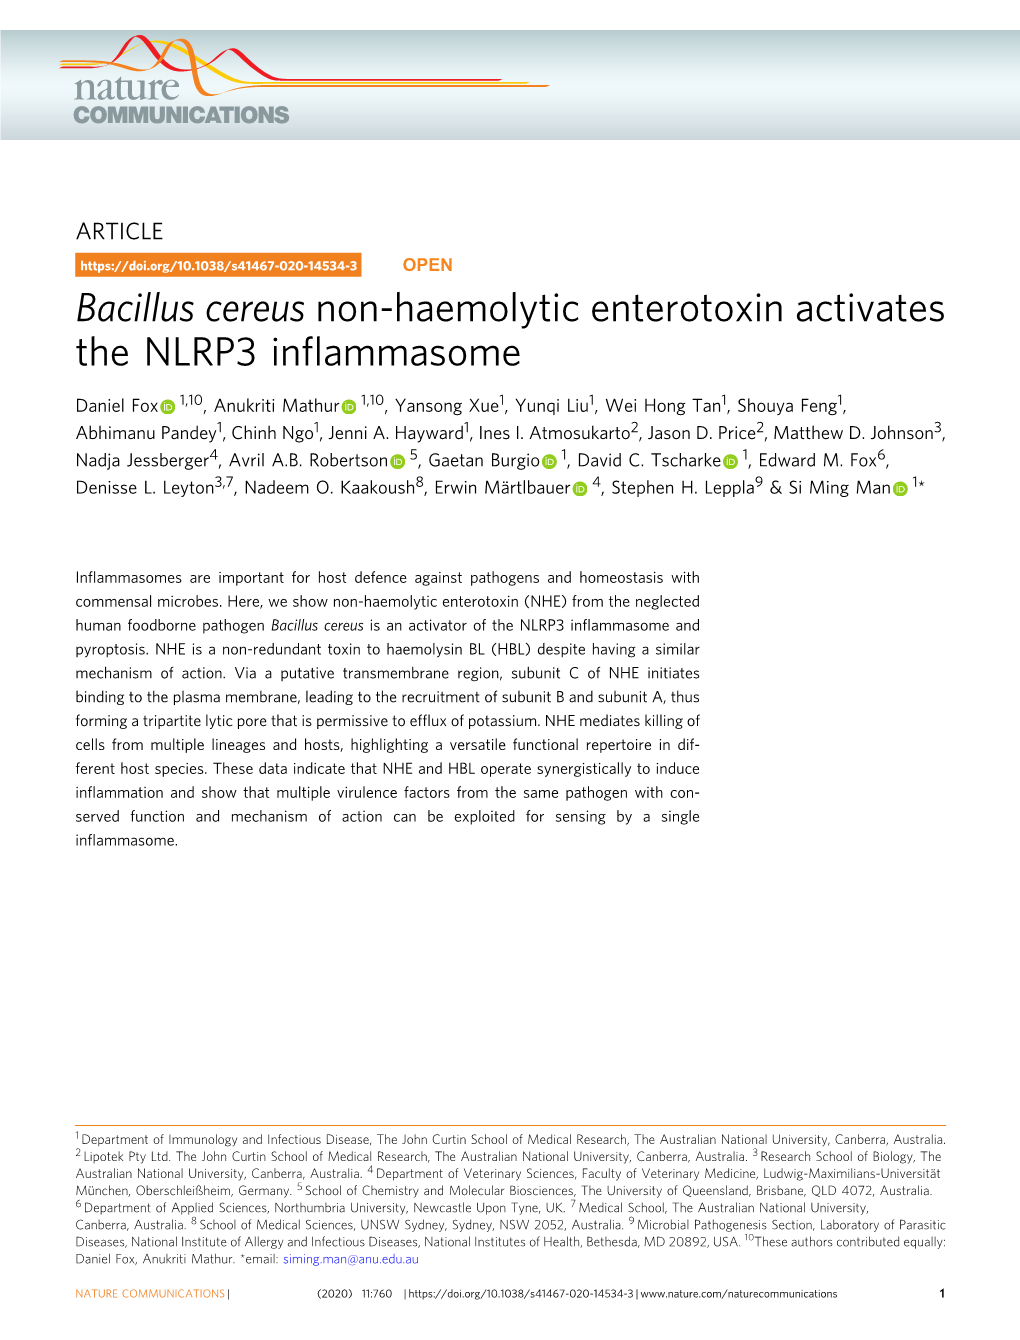 Bacillus Cereus Non-Haemolytic Enterotoxin Activates the NLRP3 Inﬂammasome